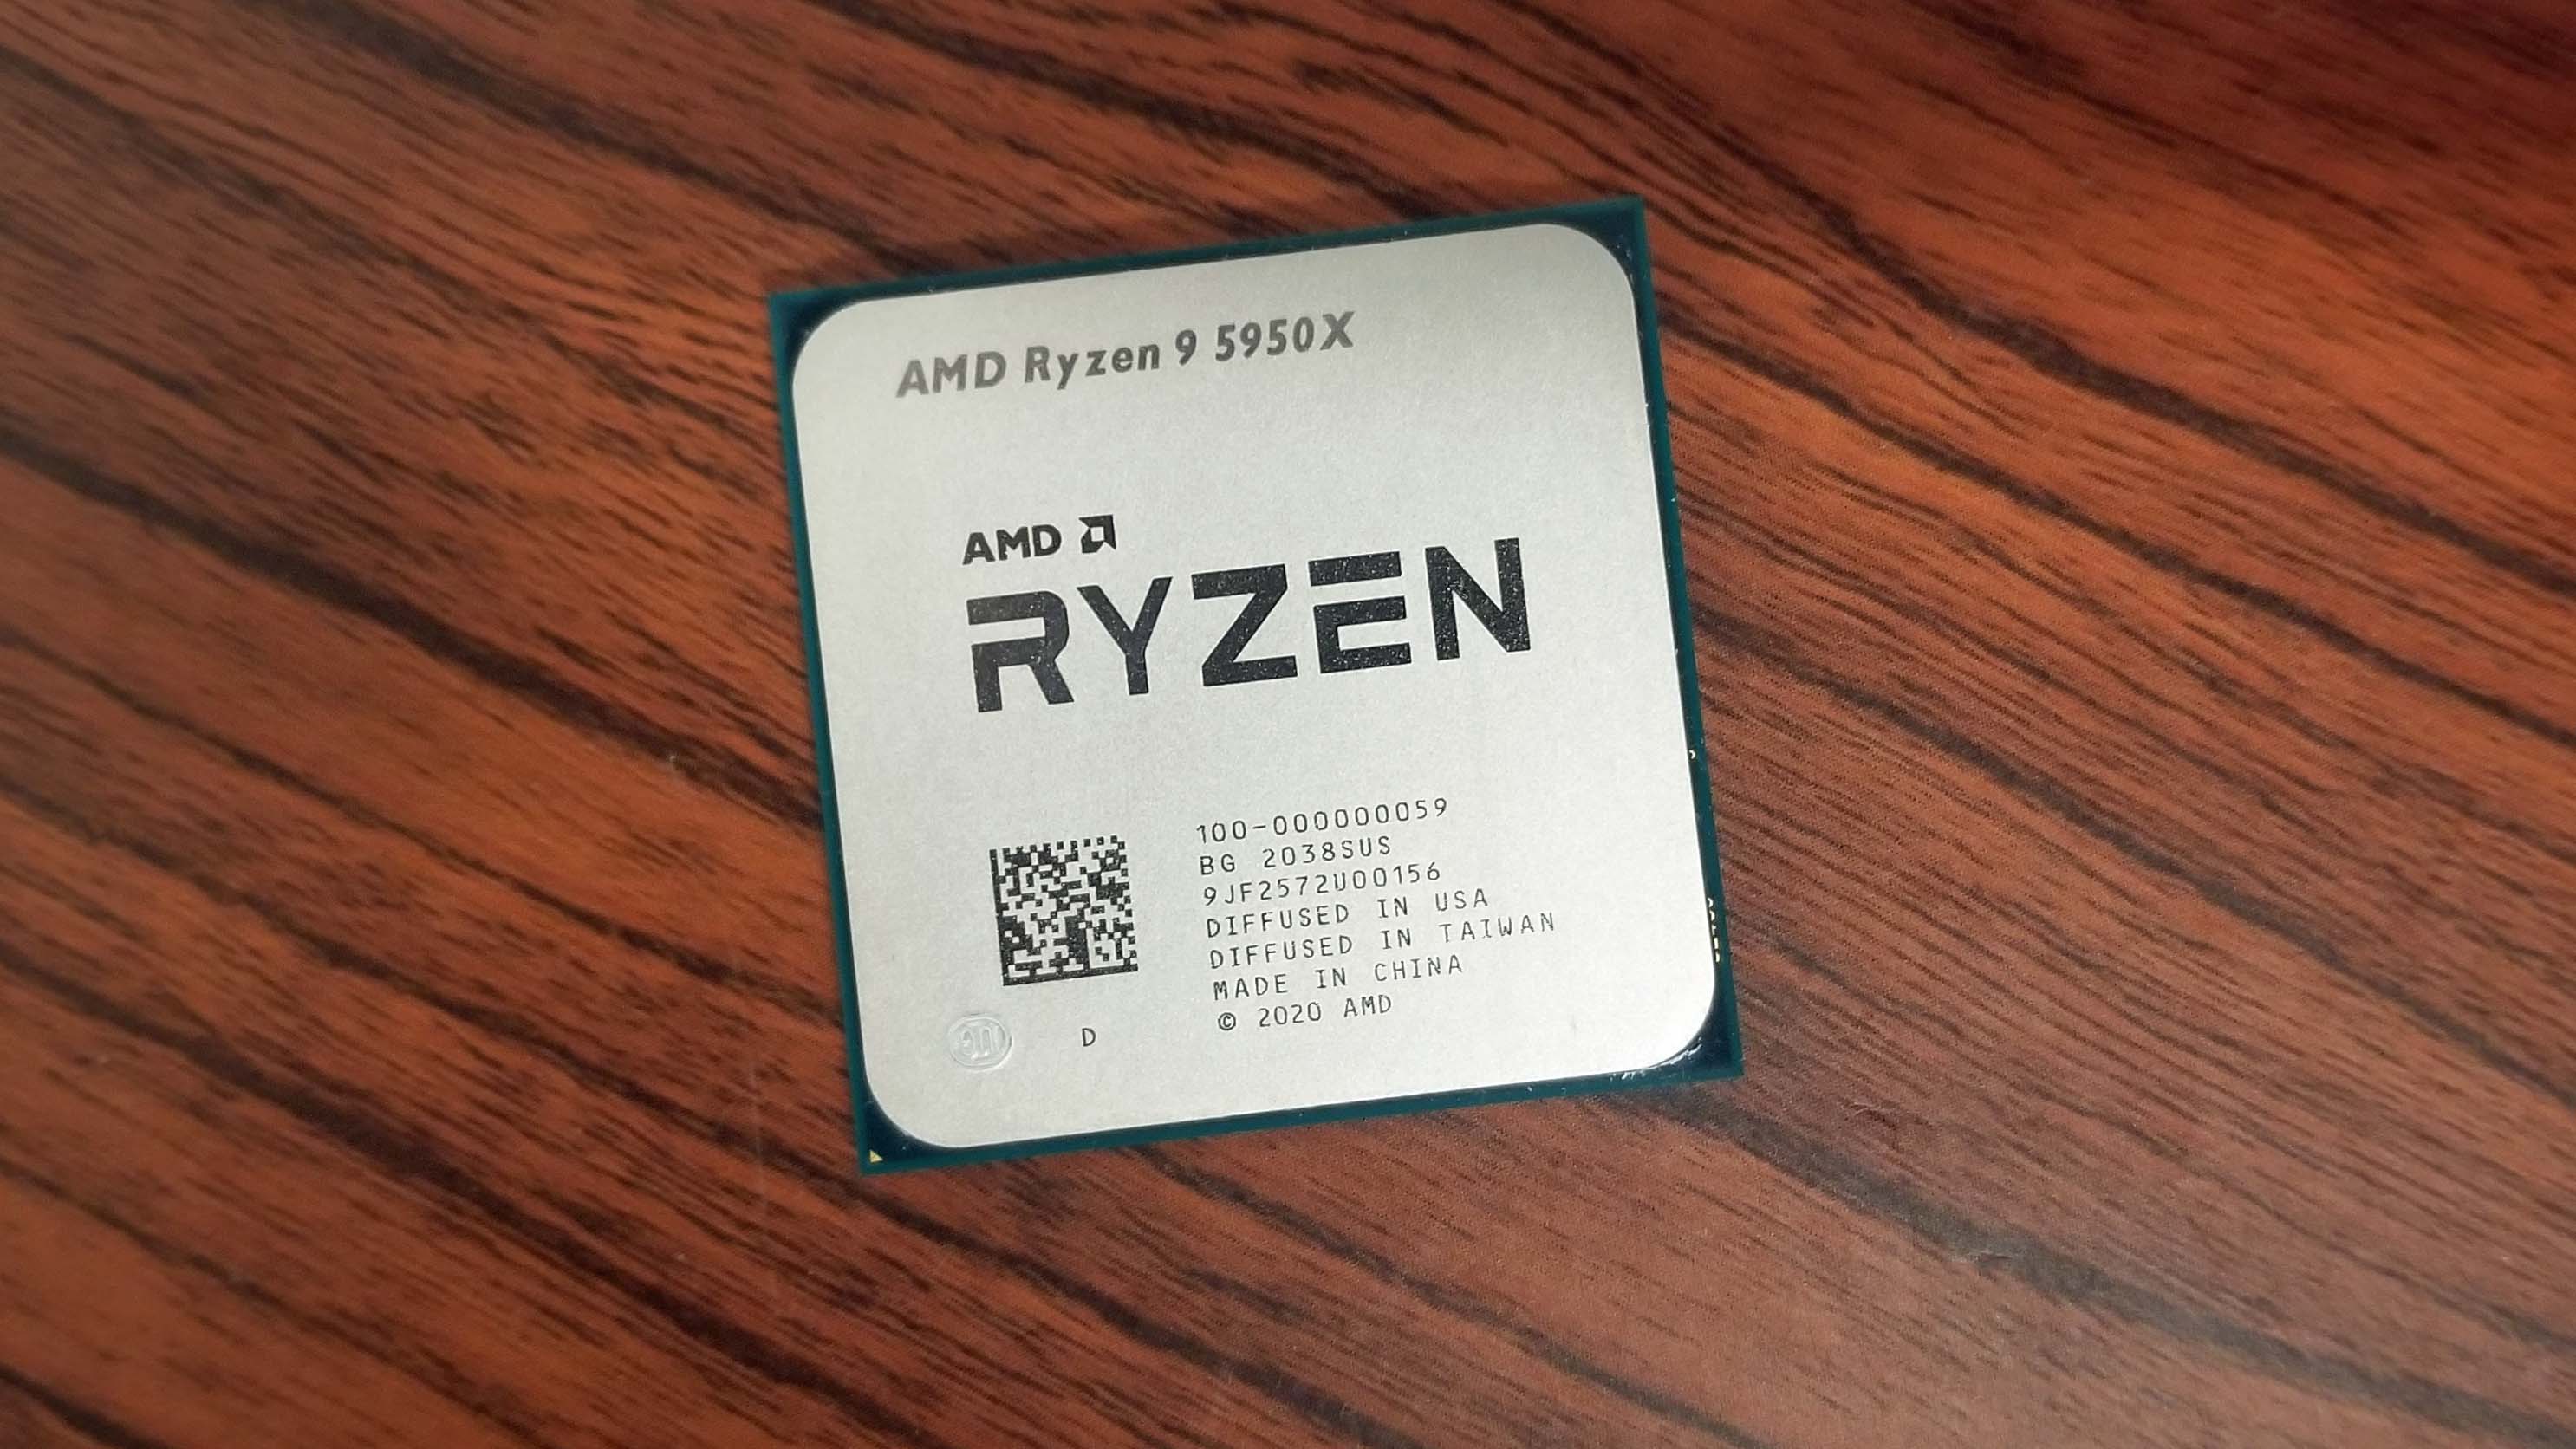 AMD Ryzen 9 5950X and Ryzen 9 5900X Gaming Benchmarks - AMD Ryzen 9 5950X  and 5900X Review: Zen 3 Breaks the 5 GHz Barrier - Page 5